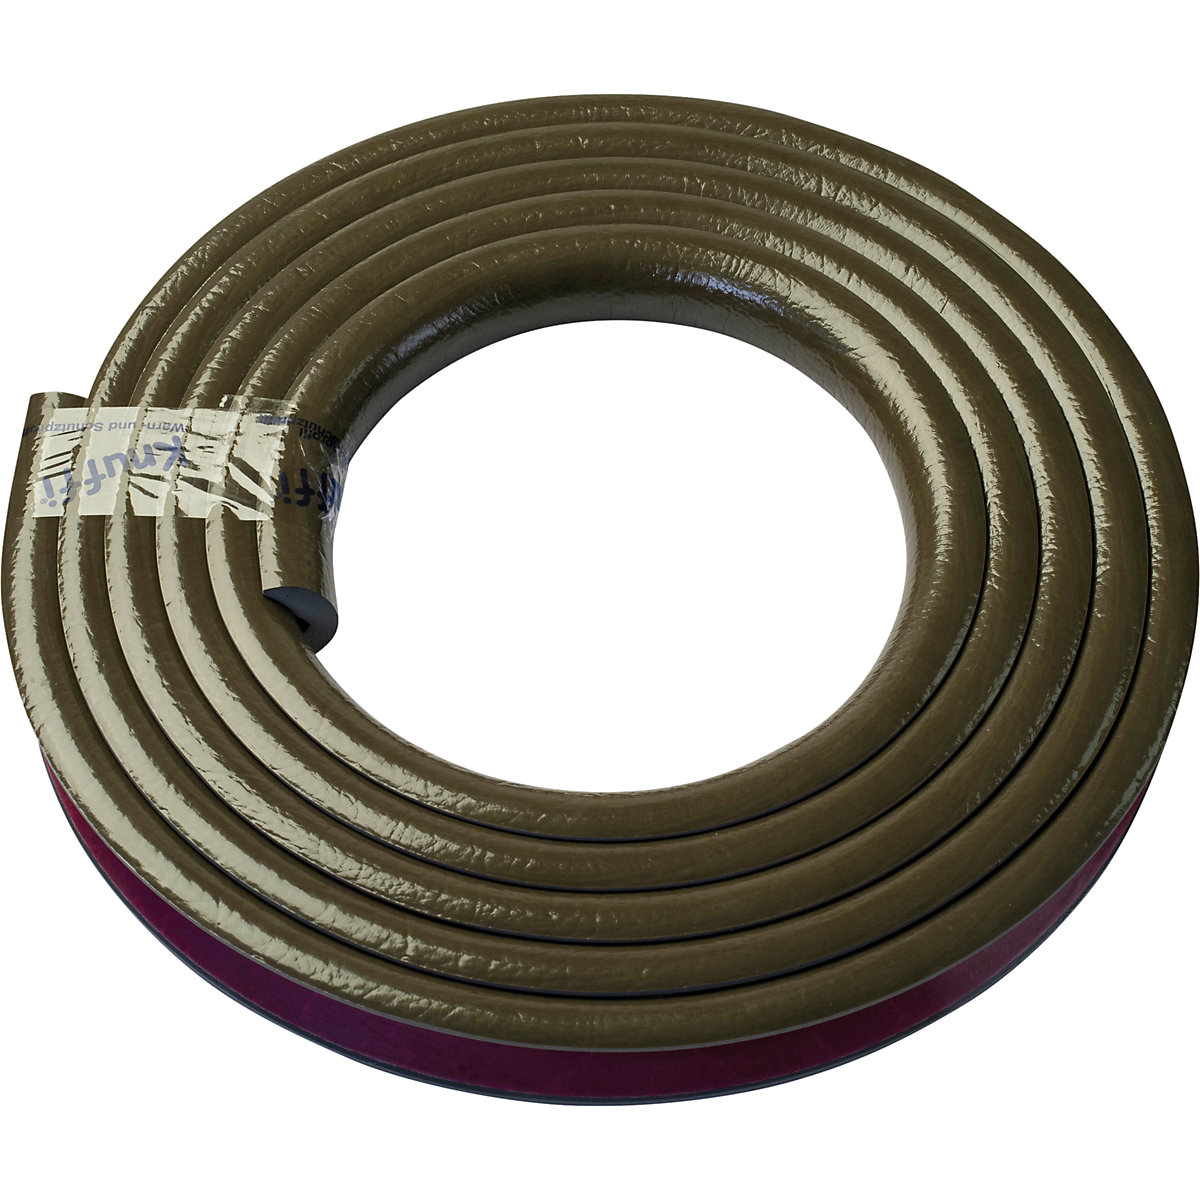 Knuffi® corner protection – SHG, type A, 1 x 5 m roll, khaki-22